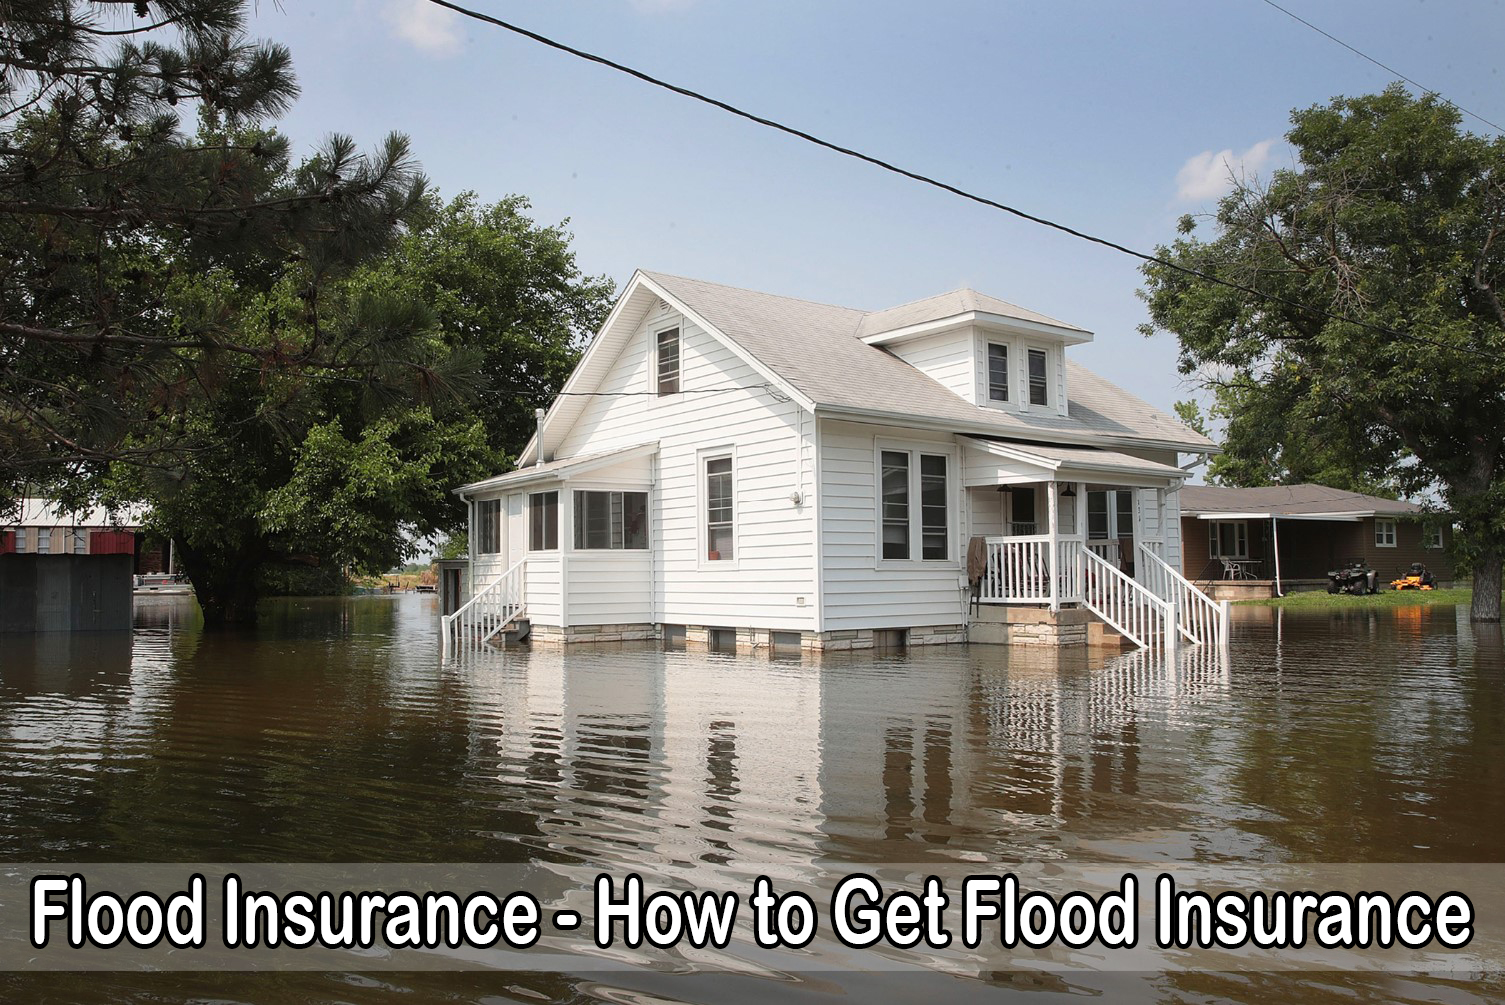 Flood Insurance - How to Get Flood Insurance